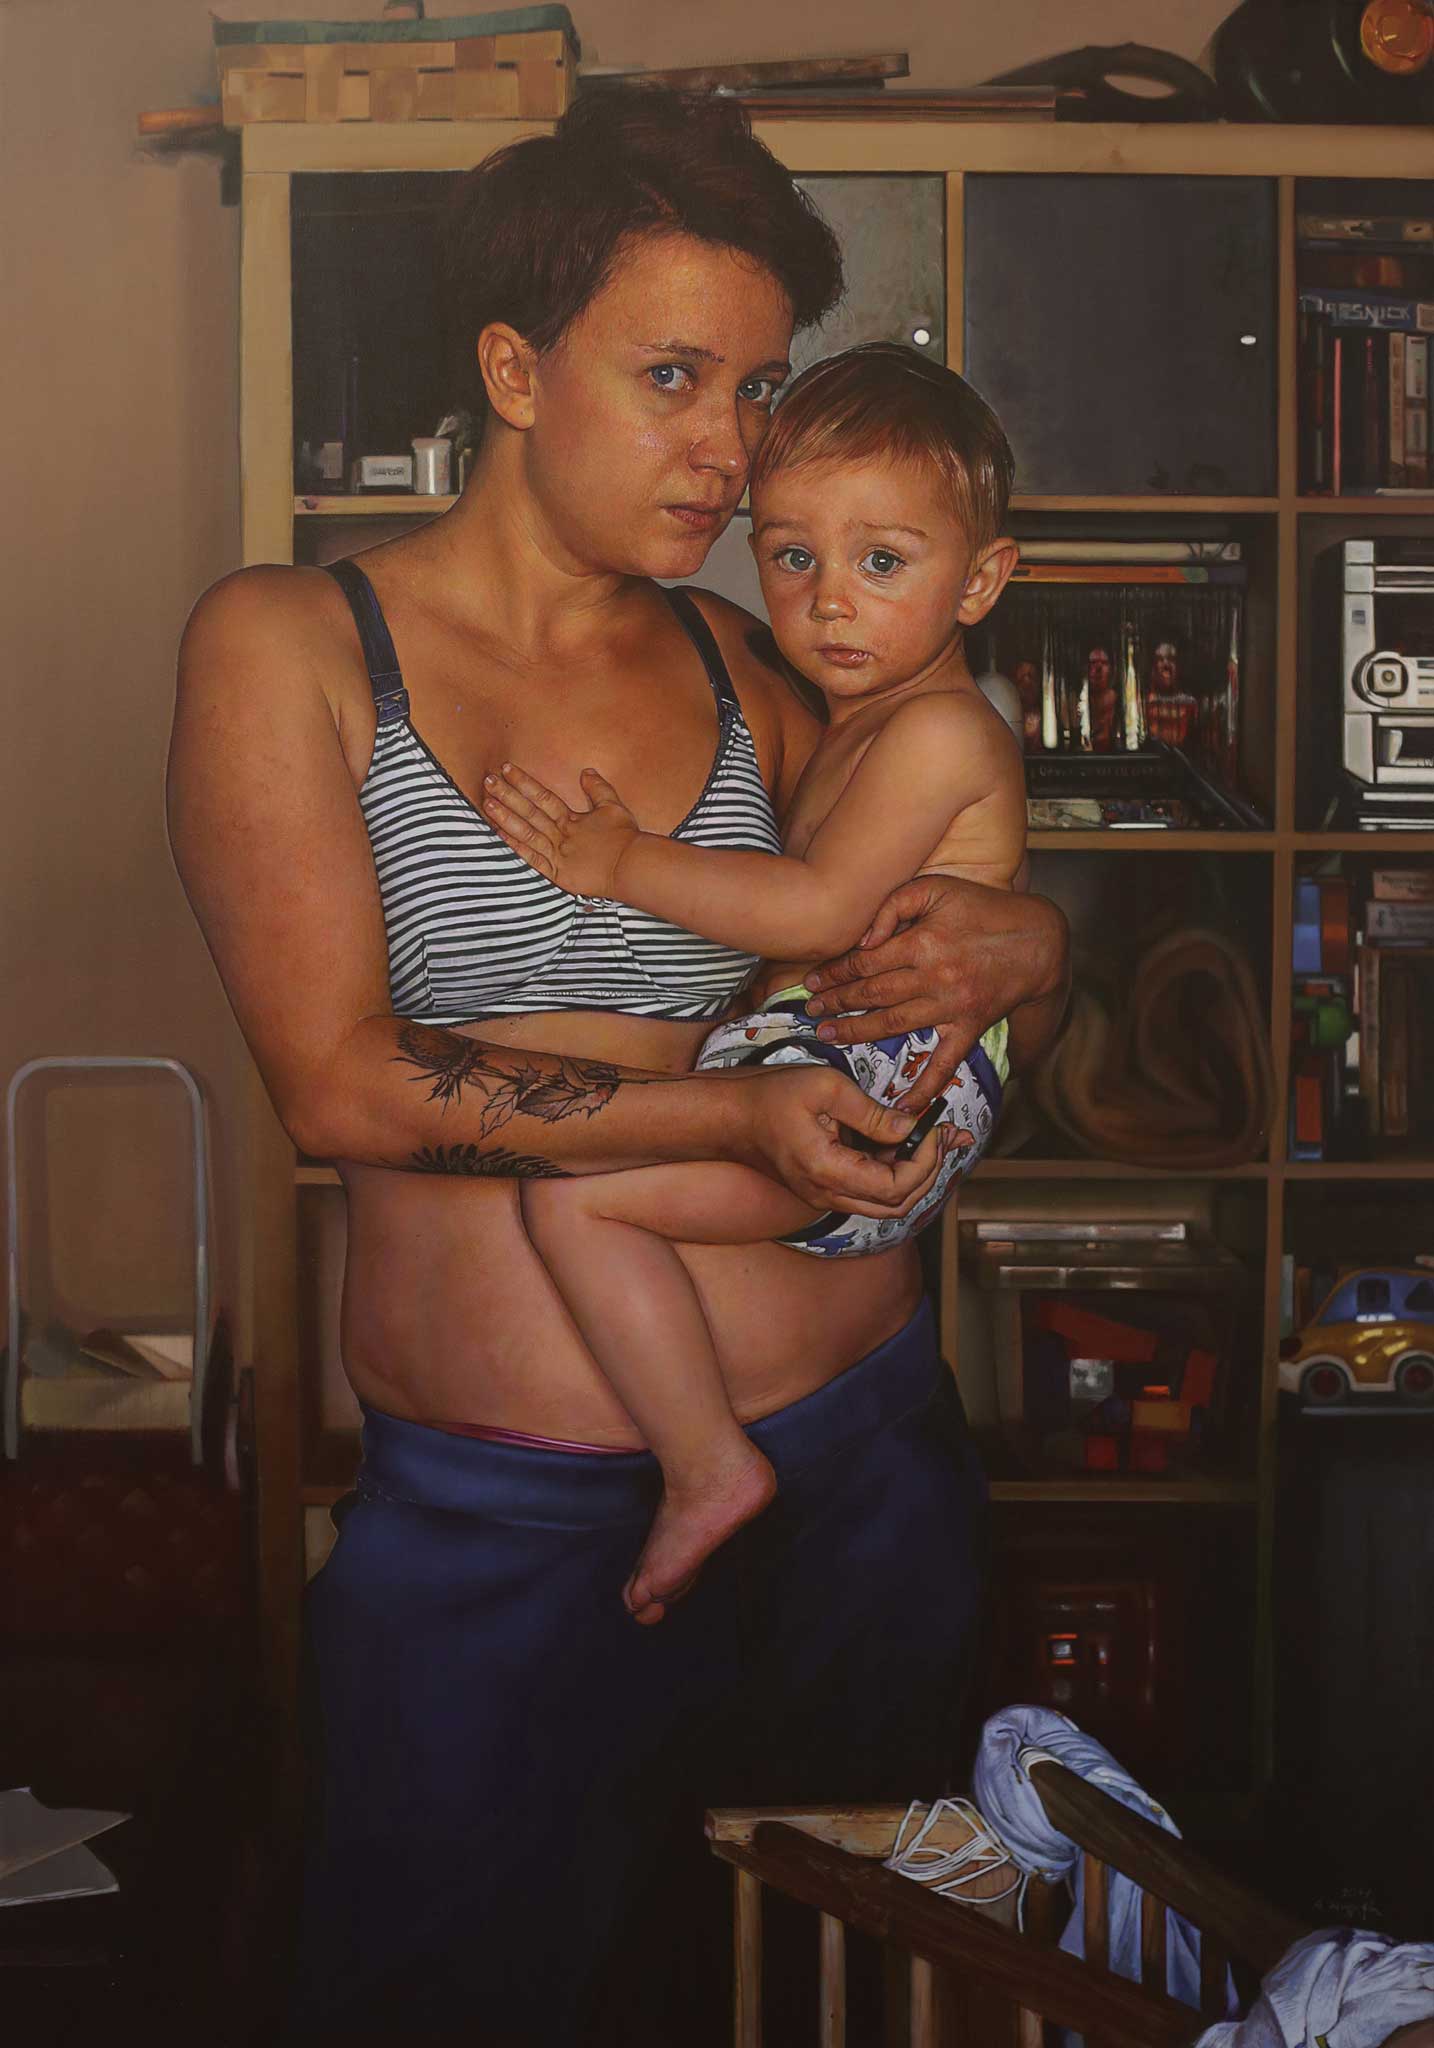 Contemporary realism - Anna Wypych - RealismToday.com